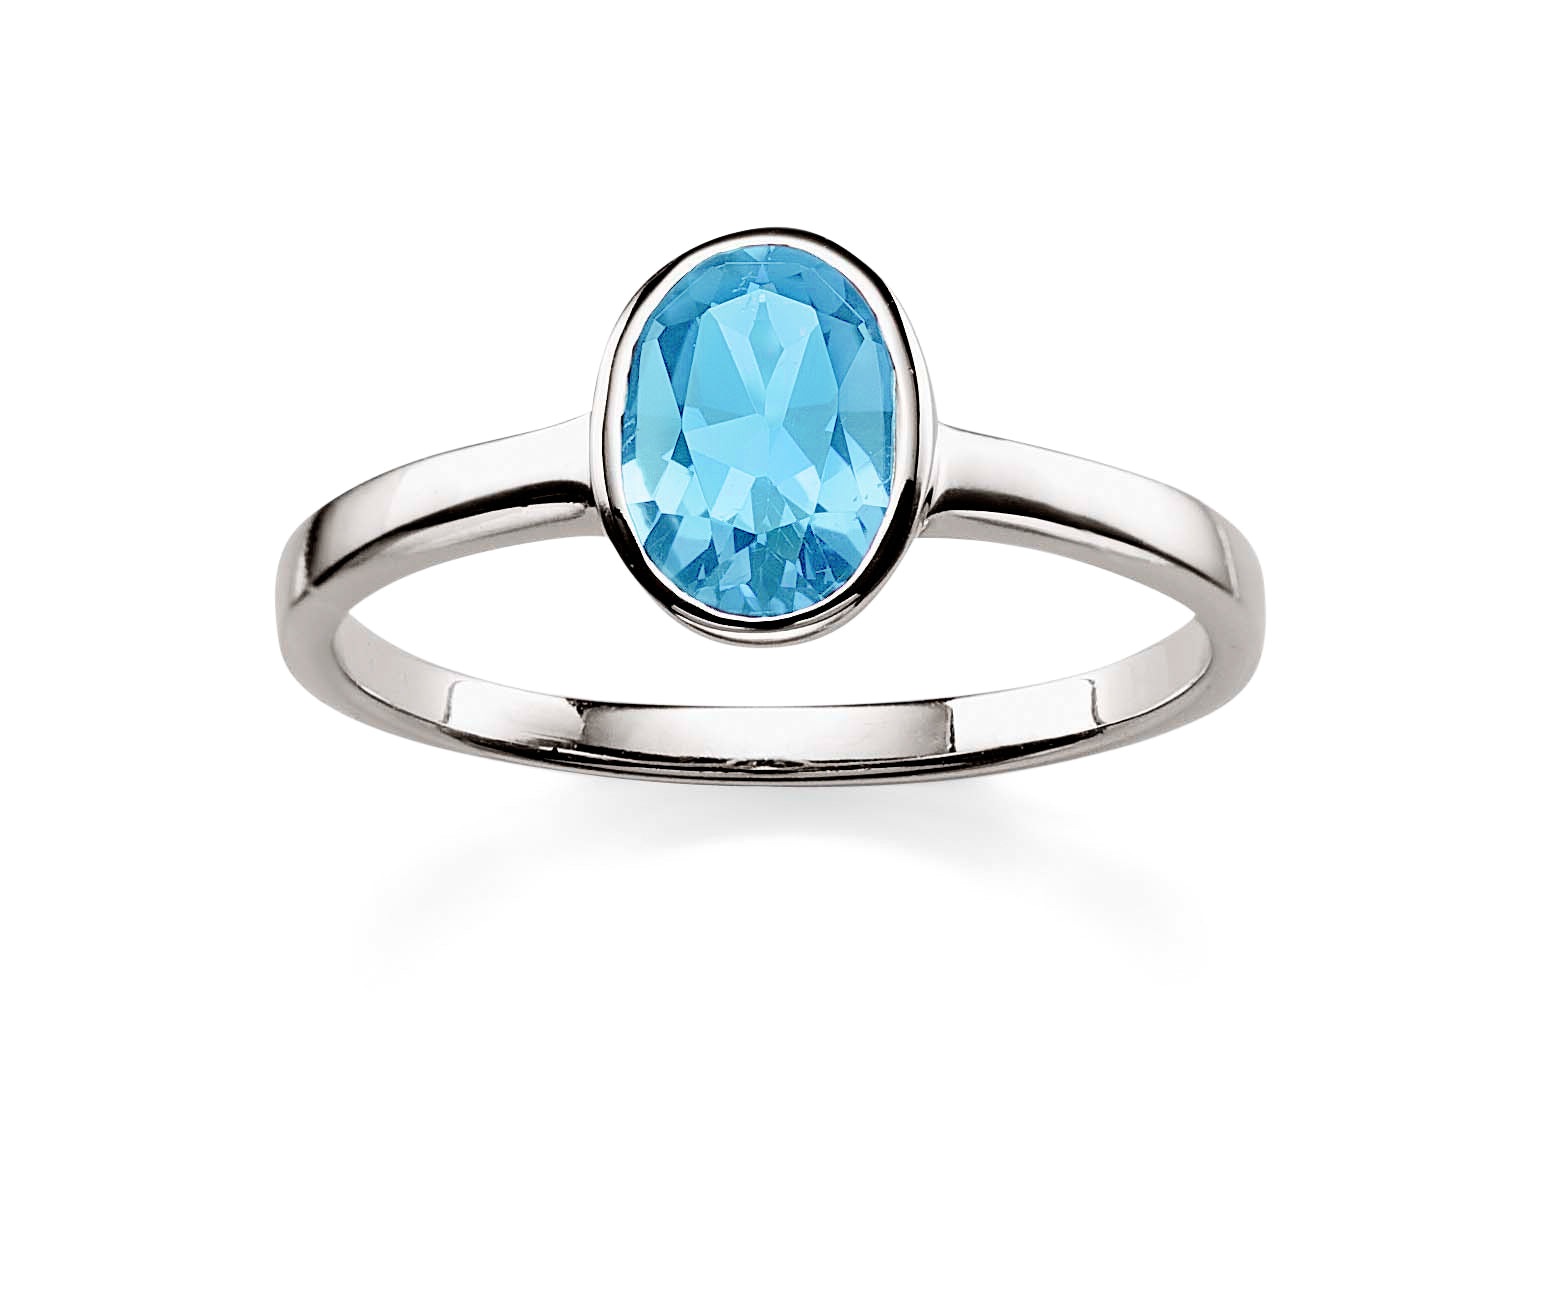 Silver blue topaz ring